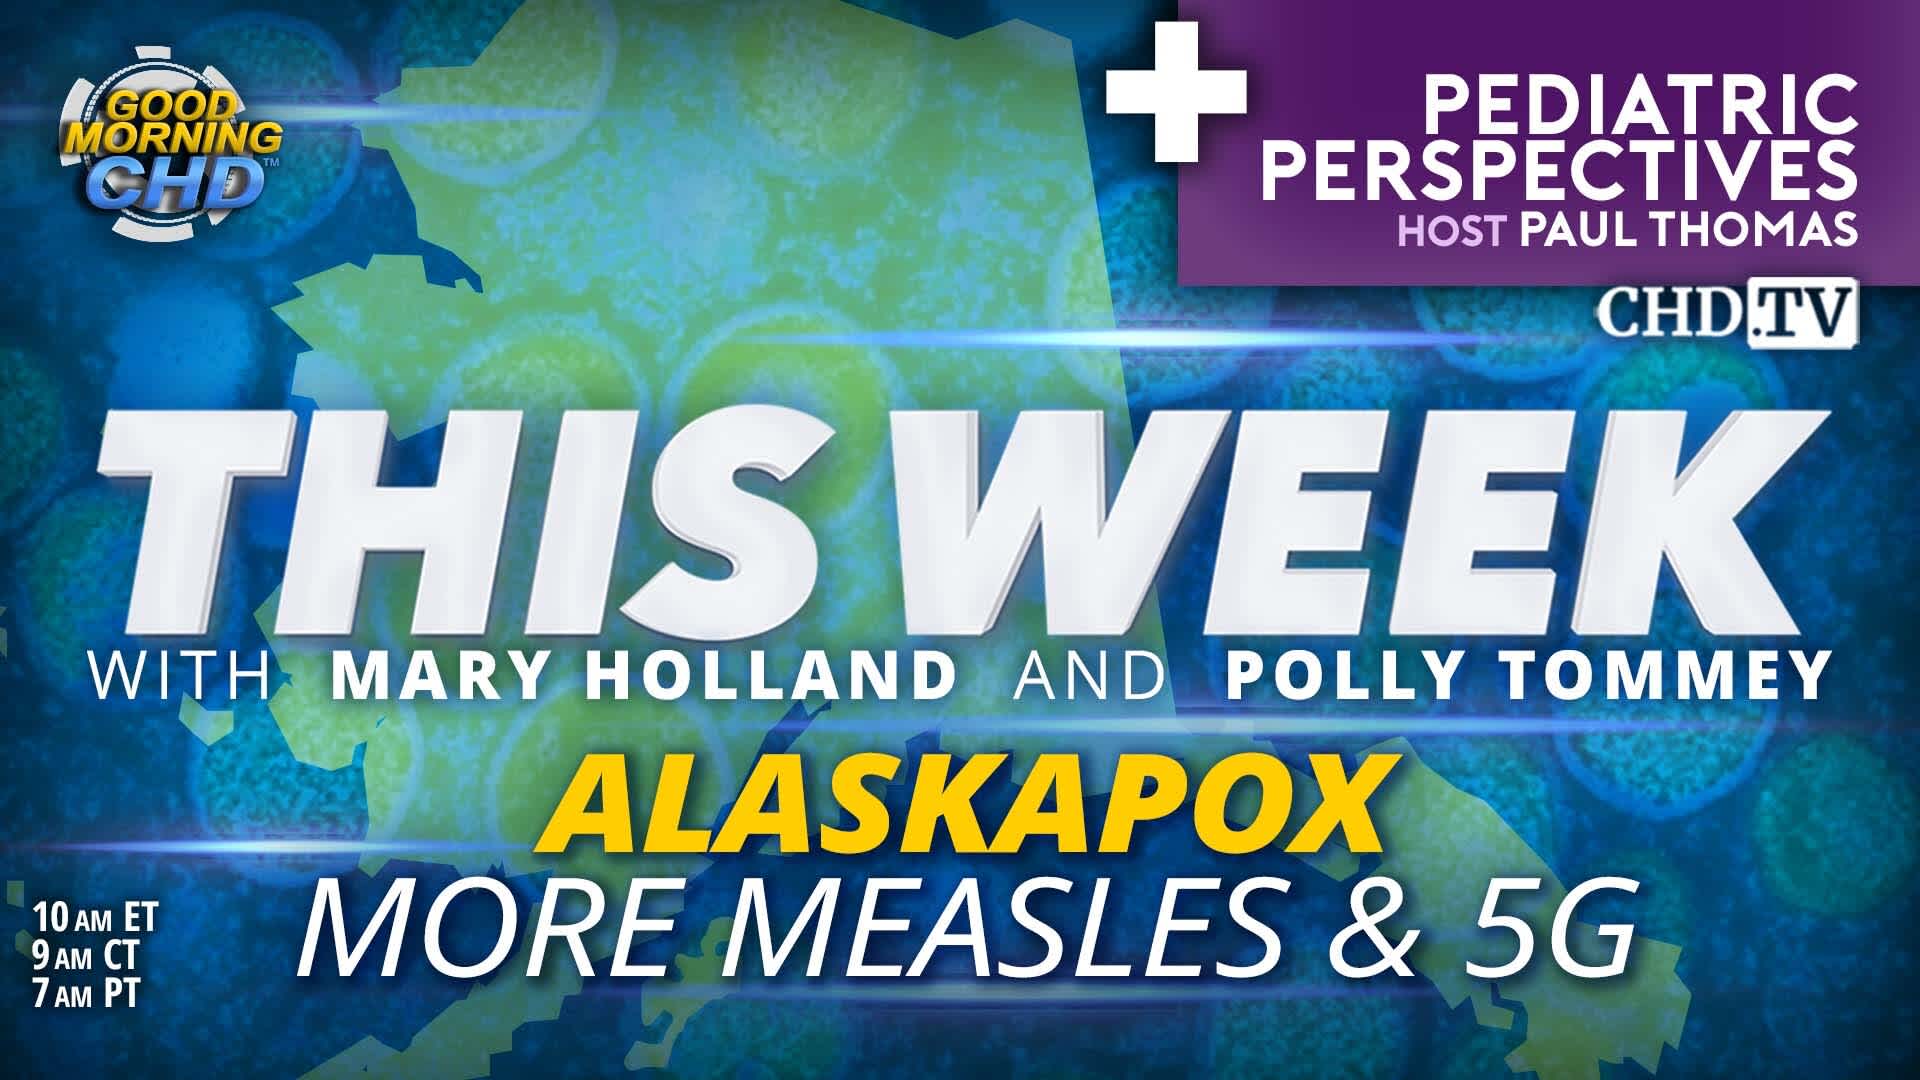 Alaskapox, More Measles & 5G